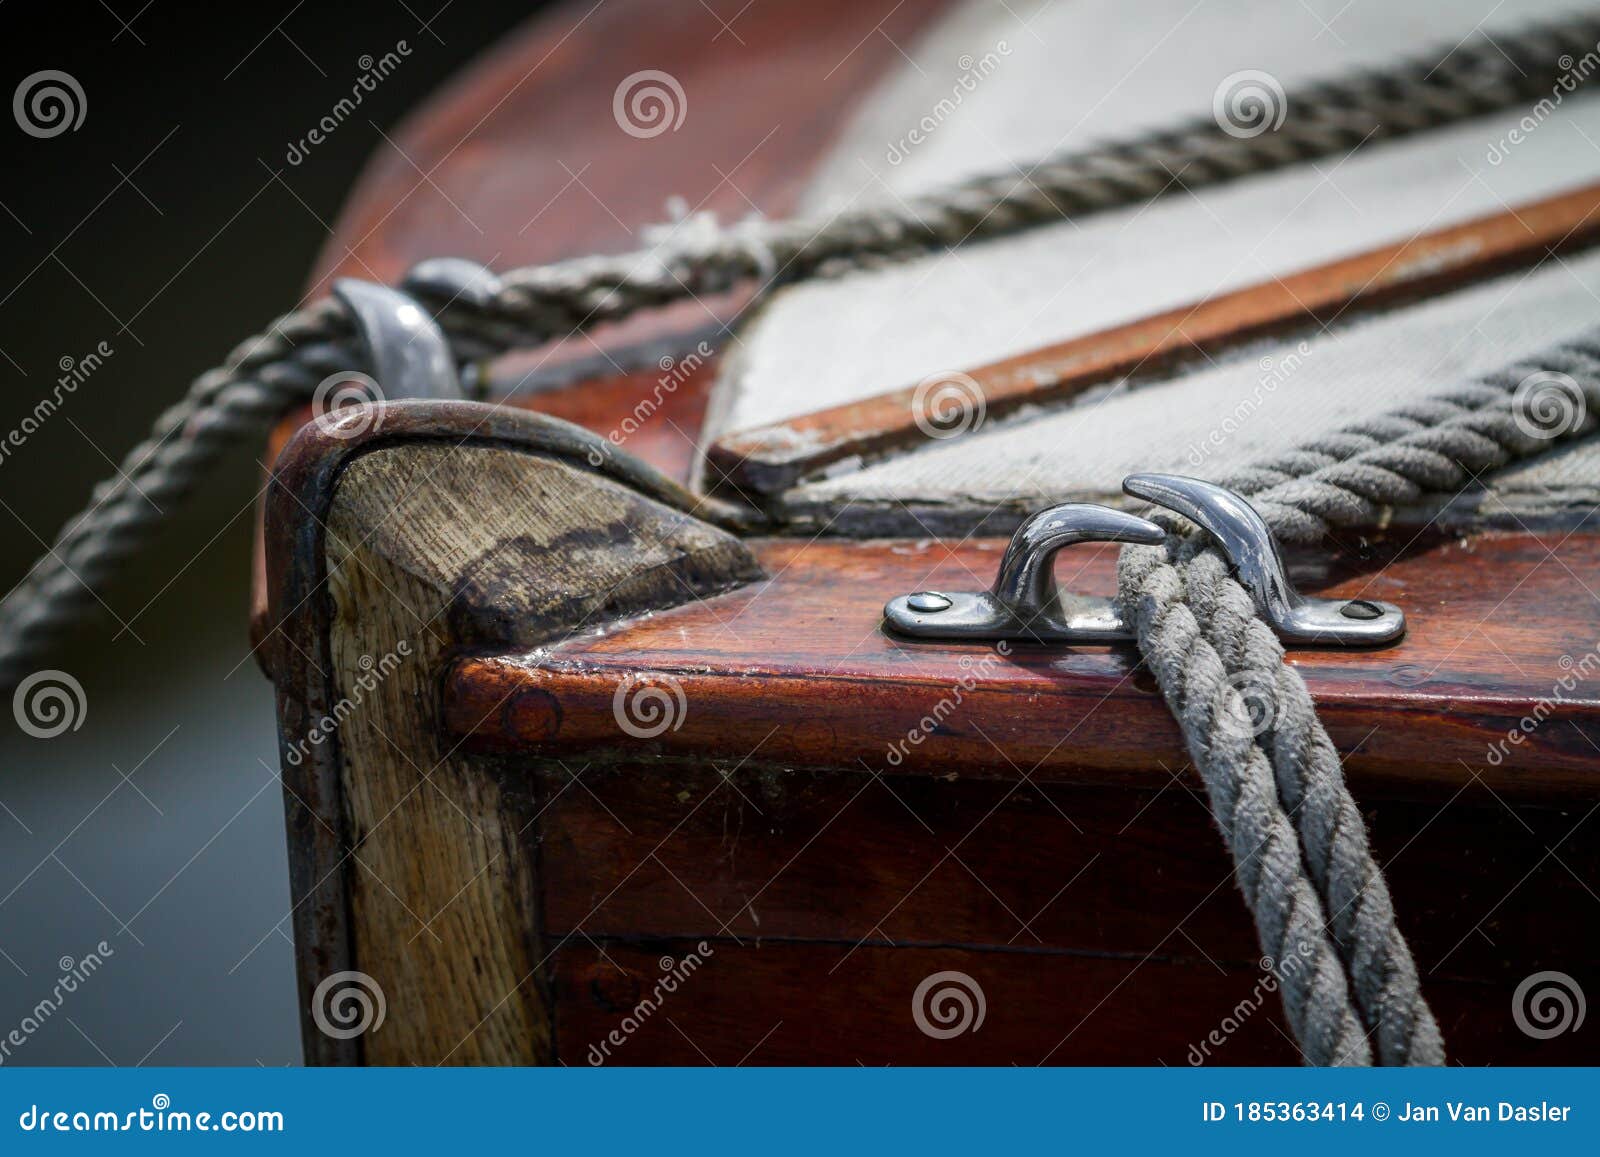 fairlead sailboat